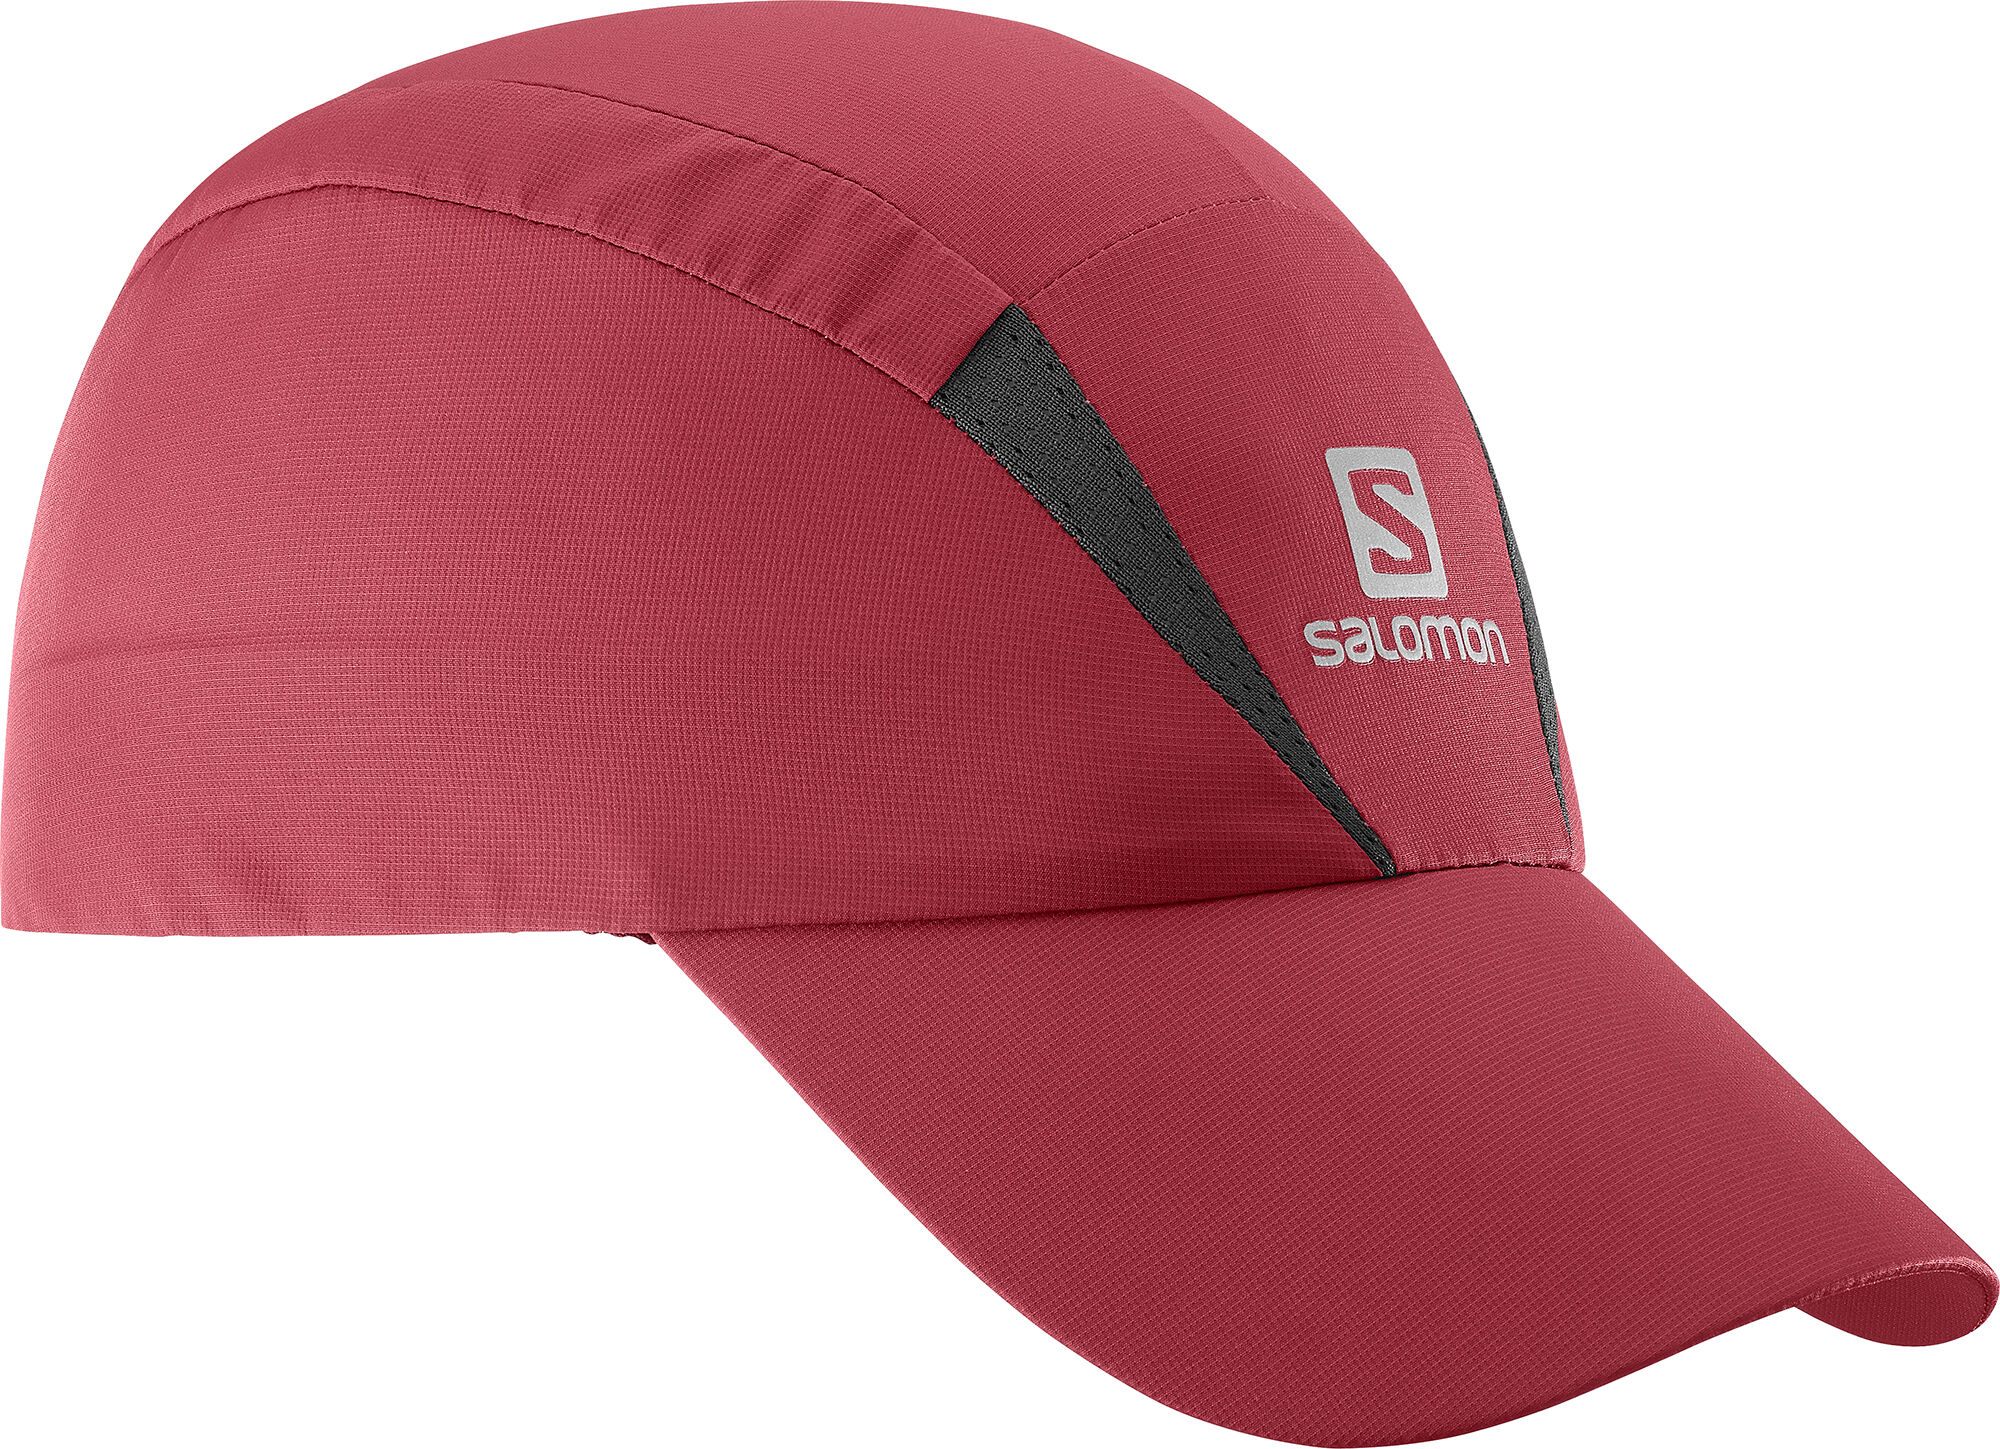 Salomon - XA CAP - Cappellino